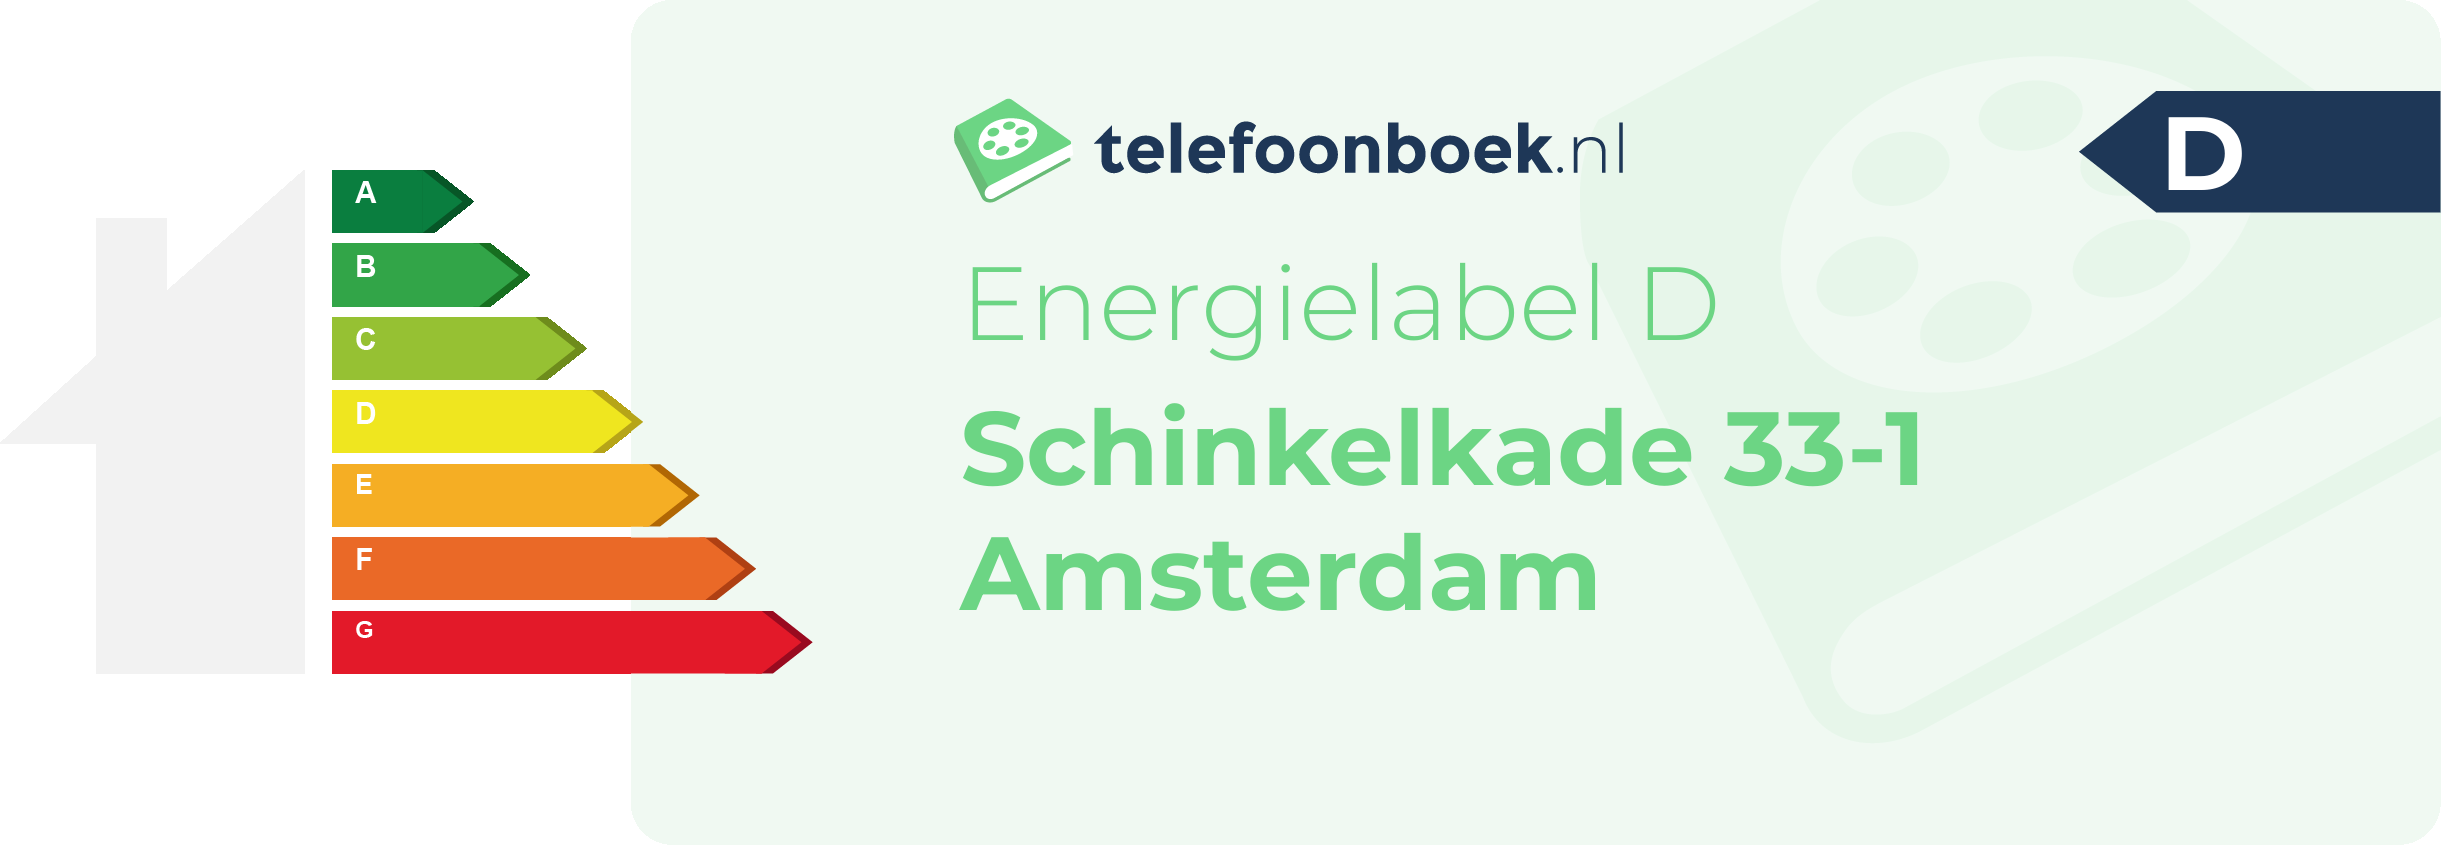 Energielabel Schinkelkade 33-1 Amsterdam